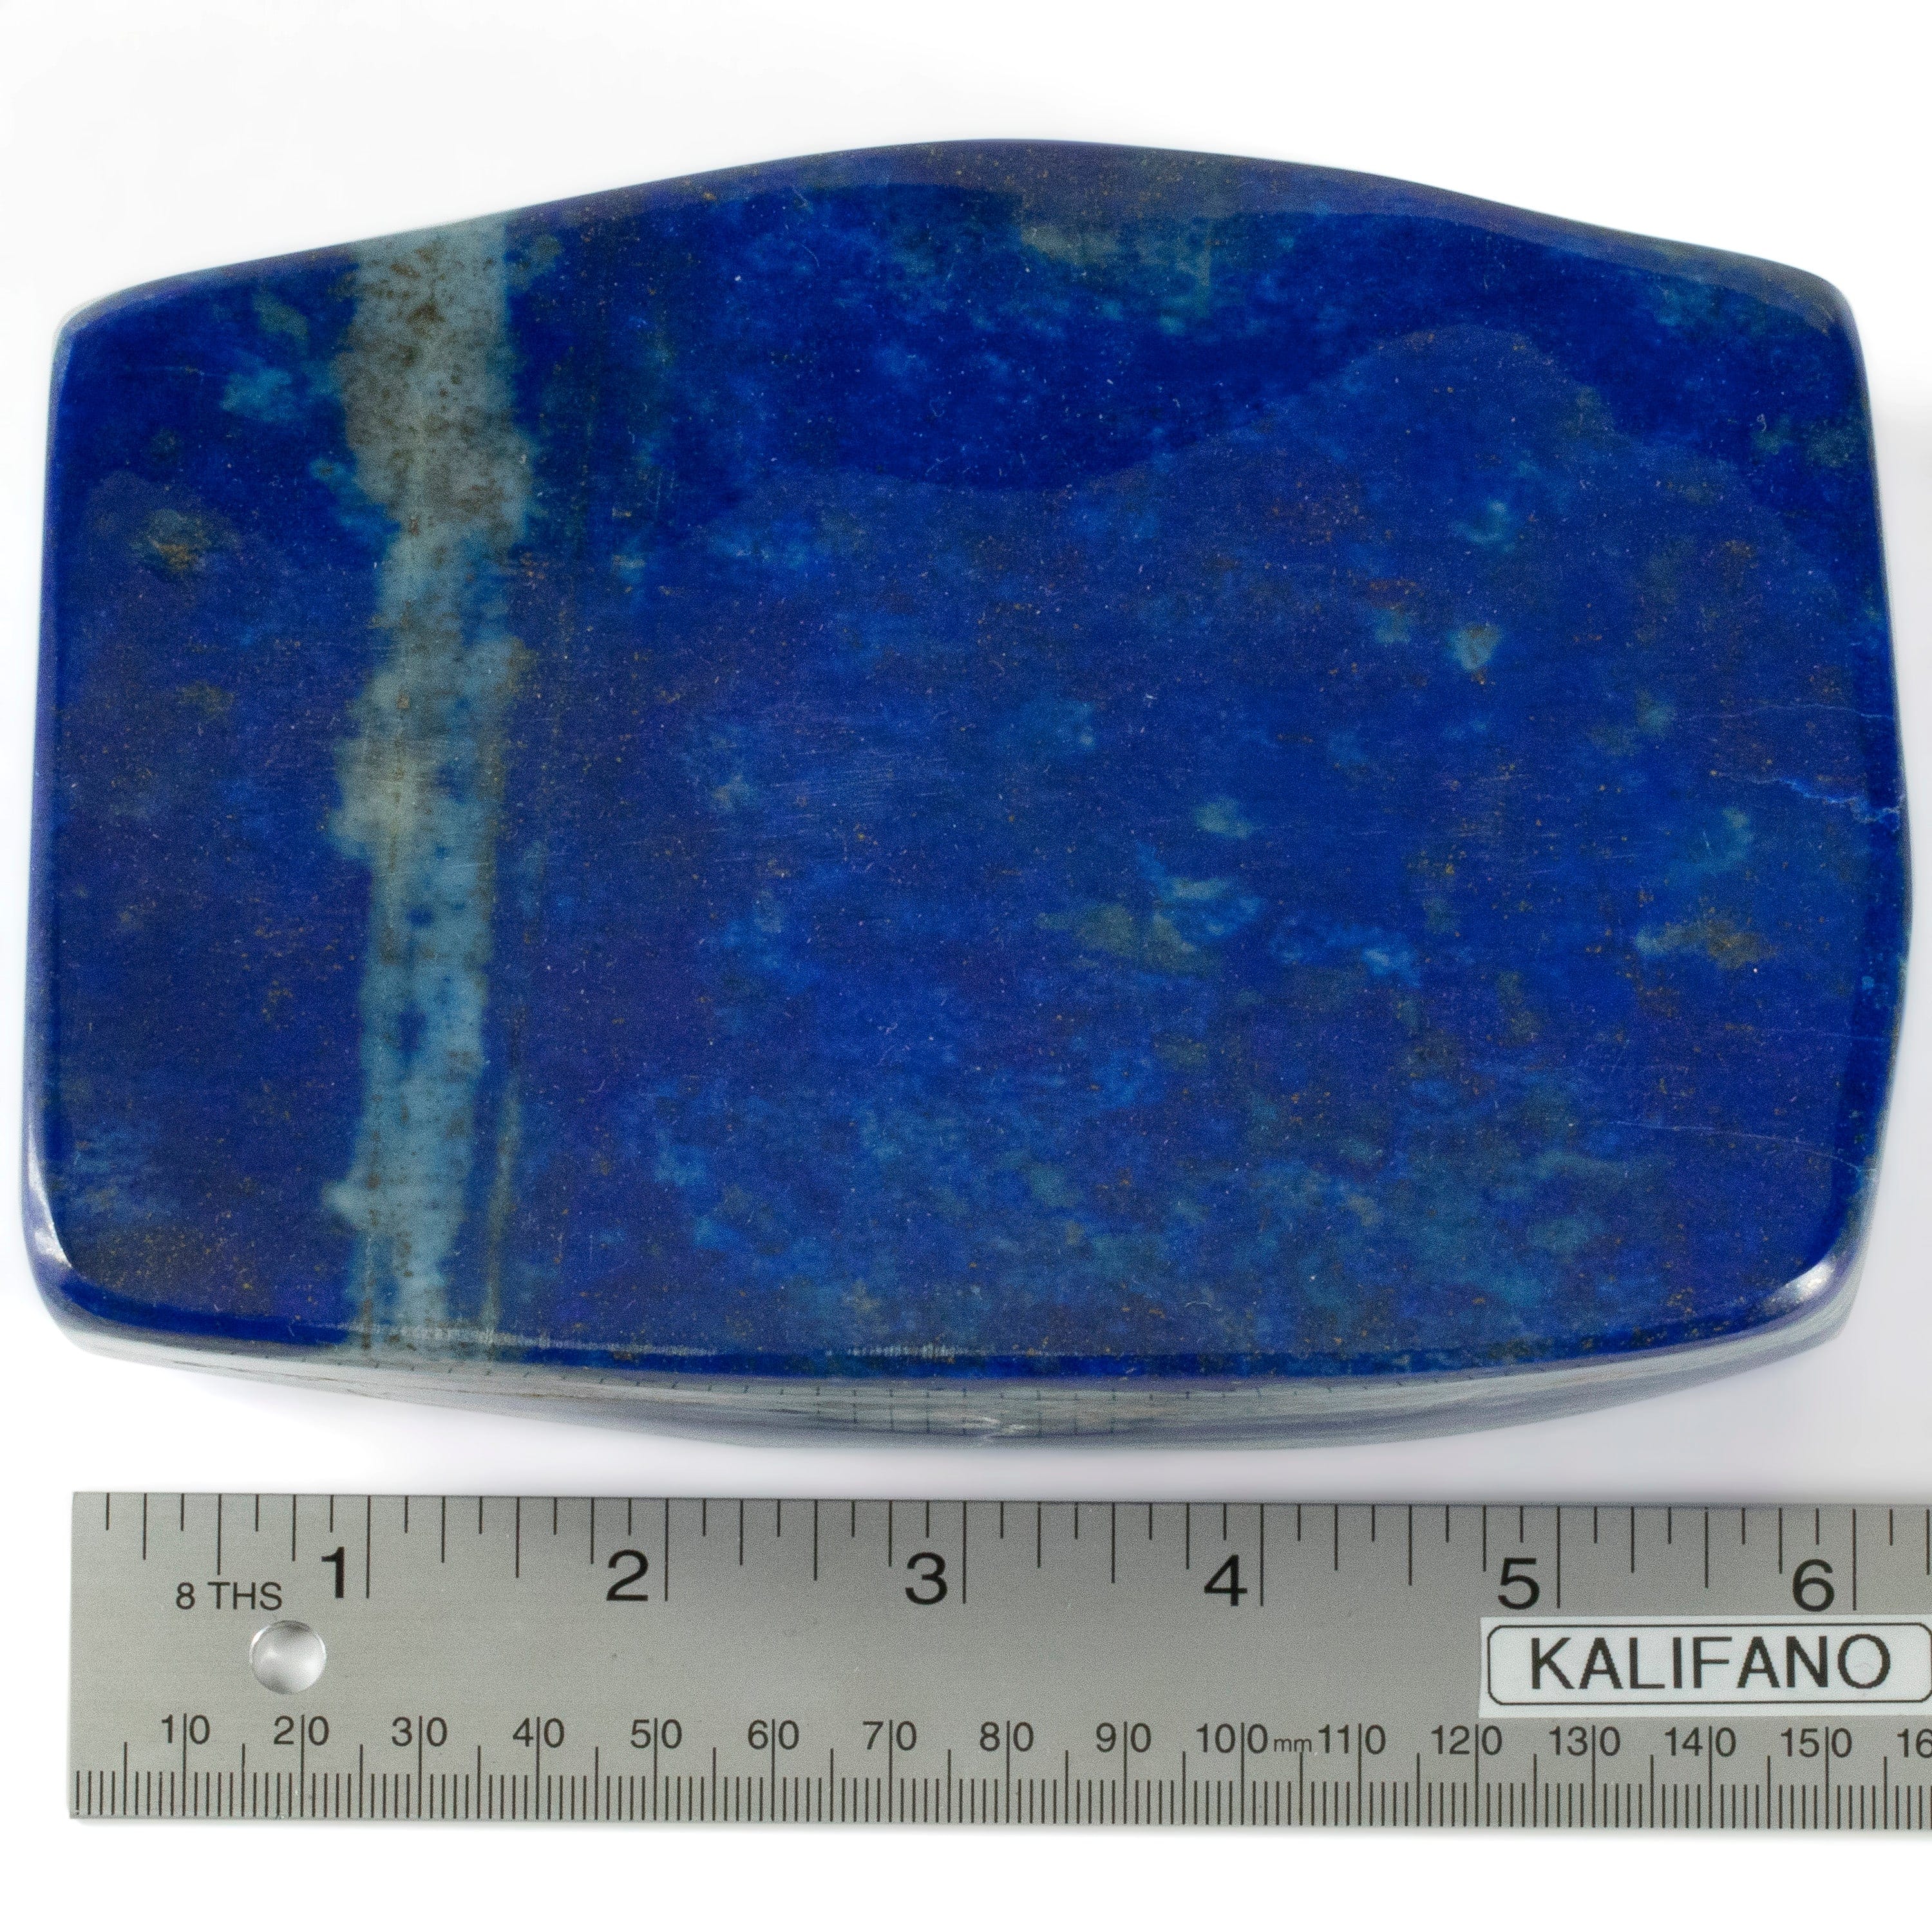 Kalifano Lapis Lapis Lazuli Freeform from Afghanistan - 6" / 2,340 grams LP2350.001